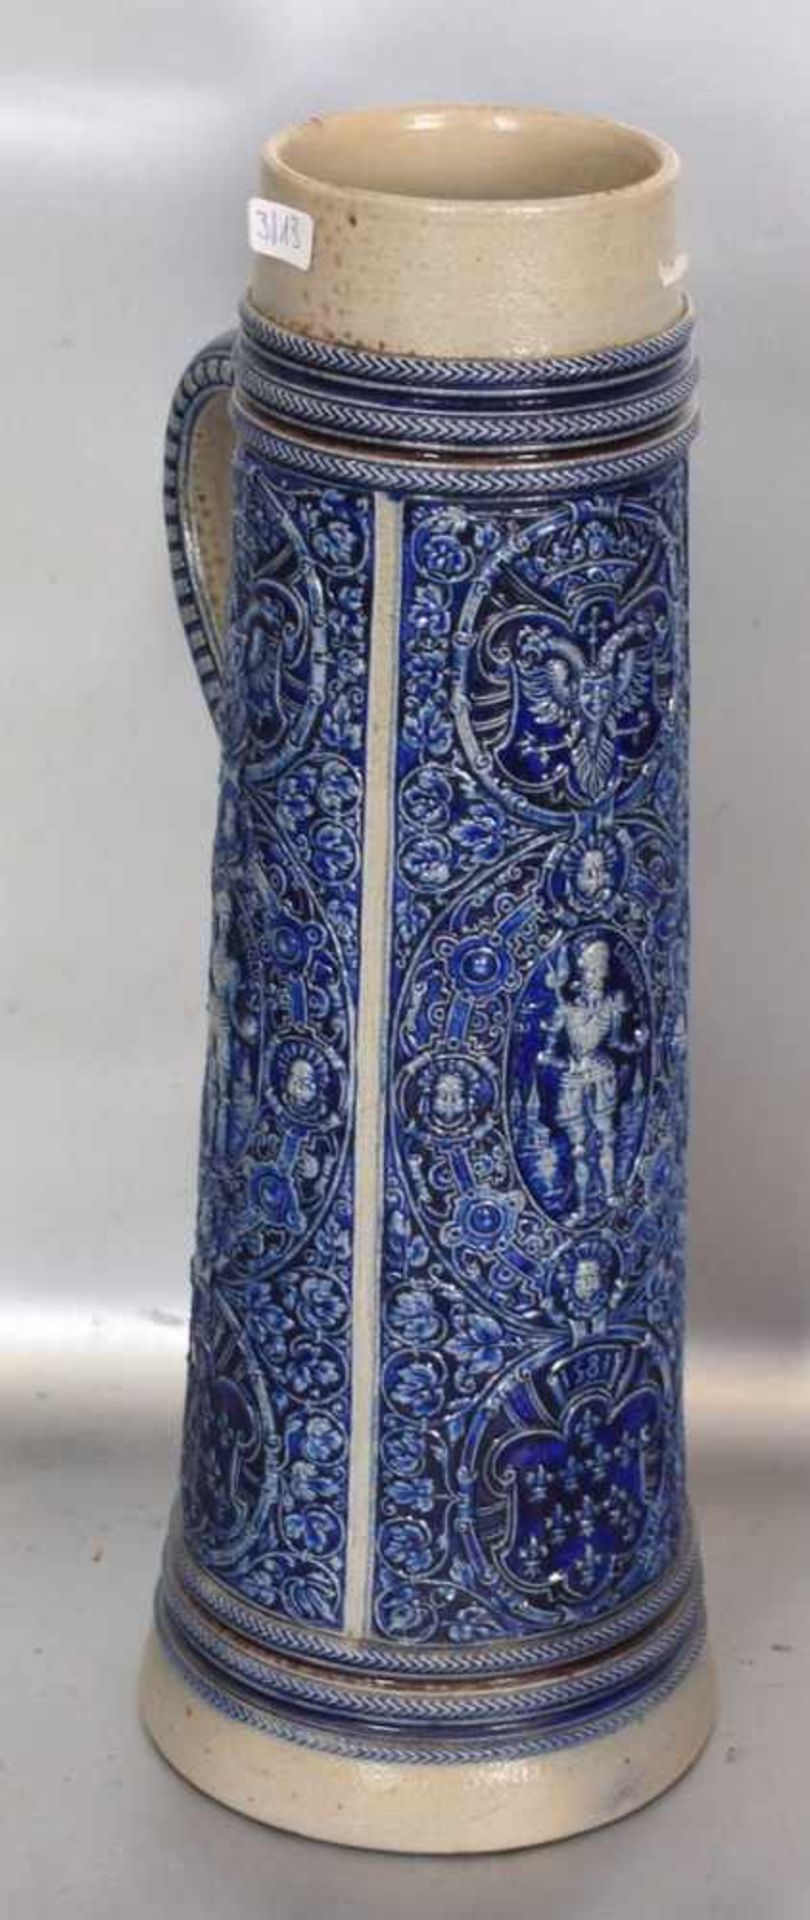 Kruggrau glasiert, Wandung mit Rittern, Ornamenten und Ranken verziert, blau bemalt, besch., H 33